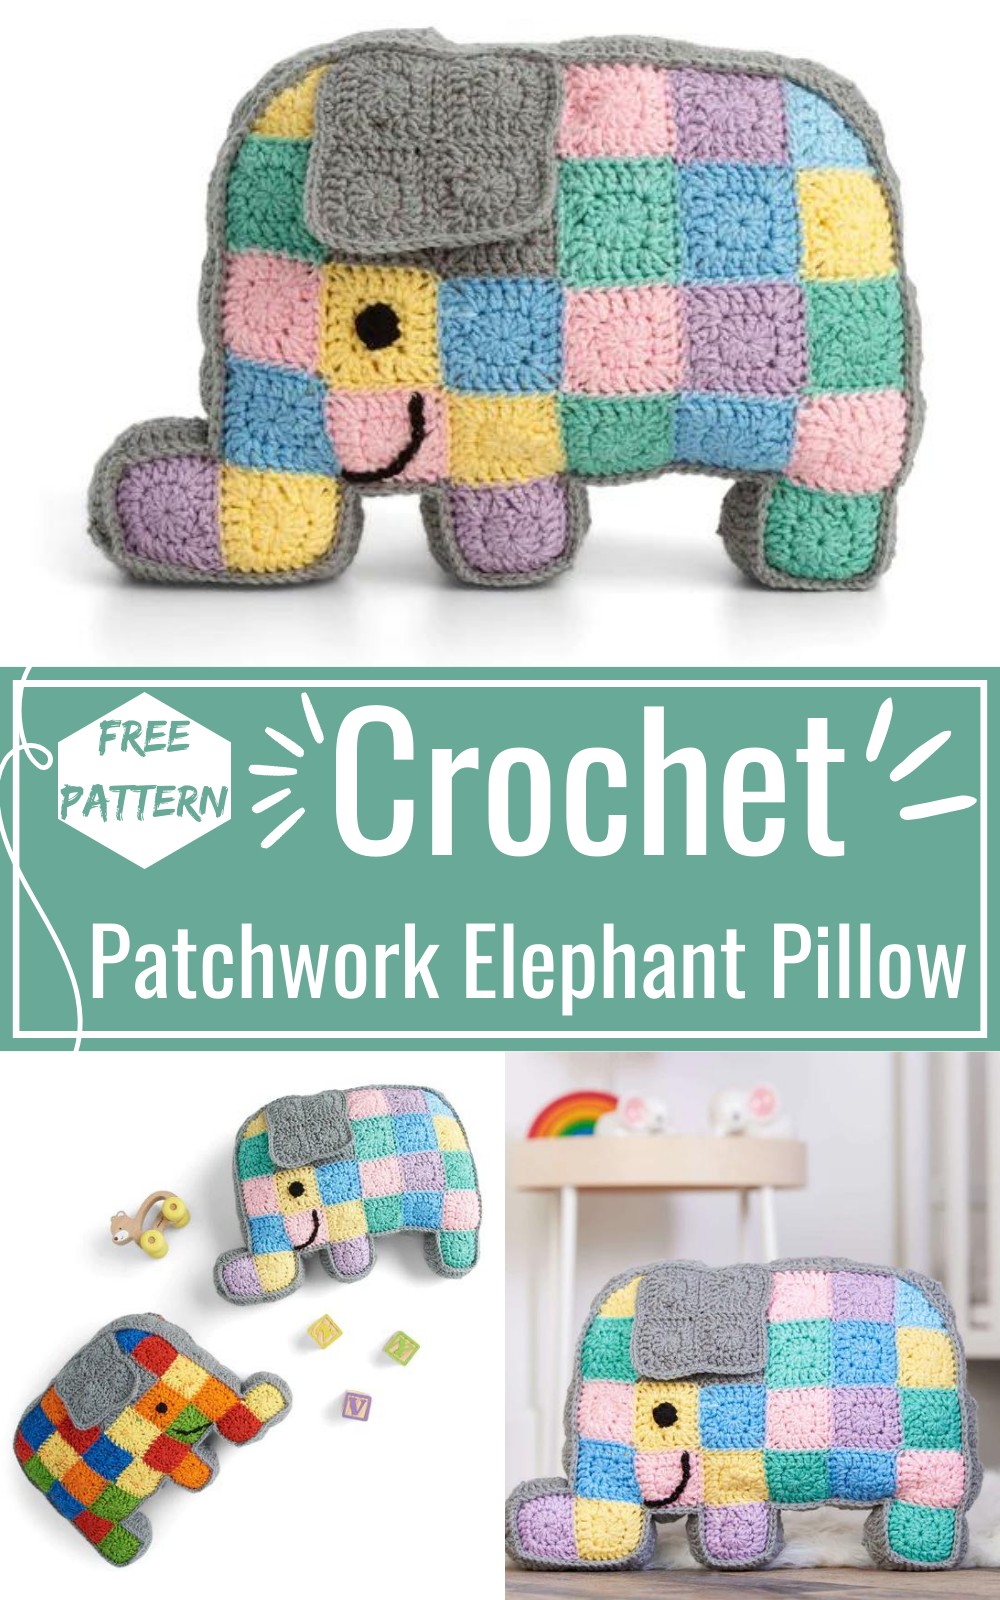 Crochet Patchwork Elephant Pillow